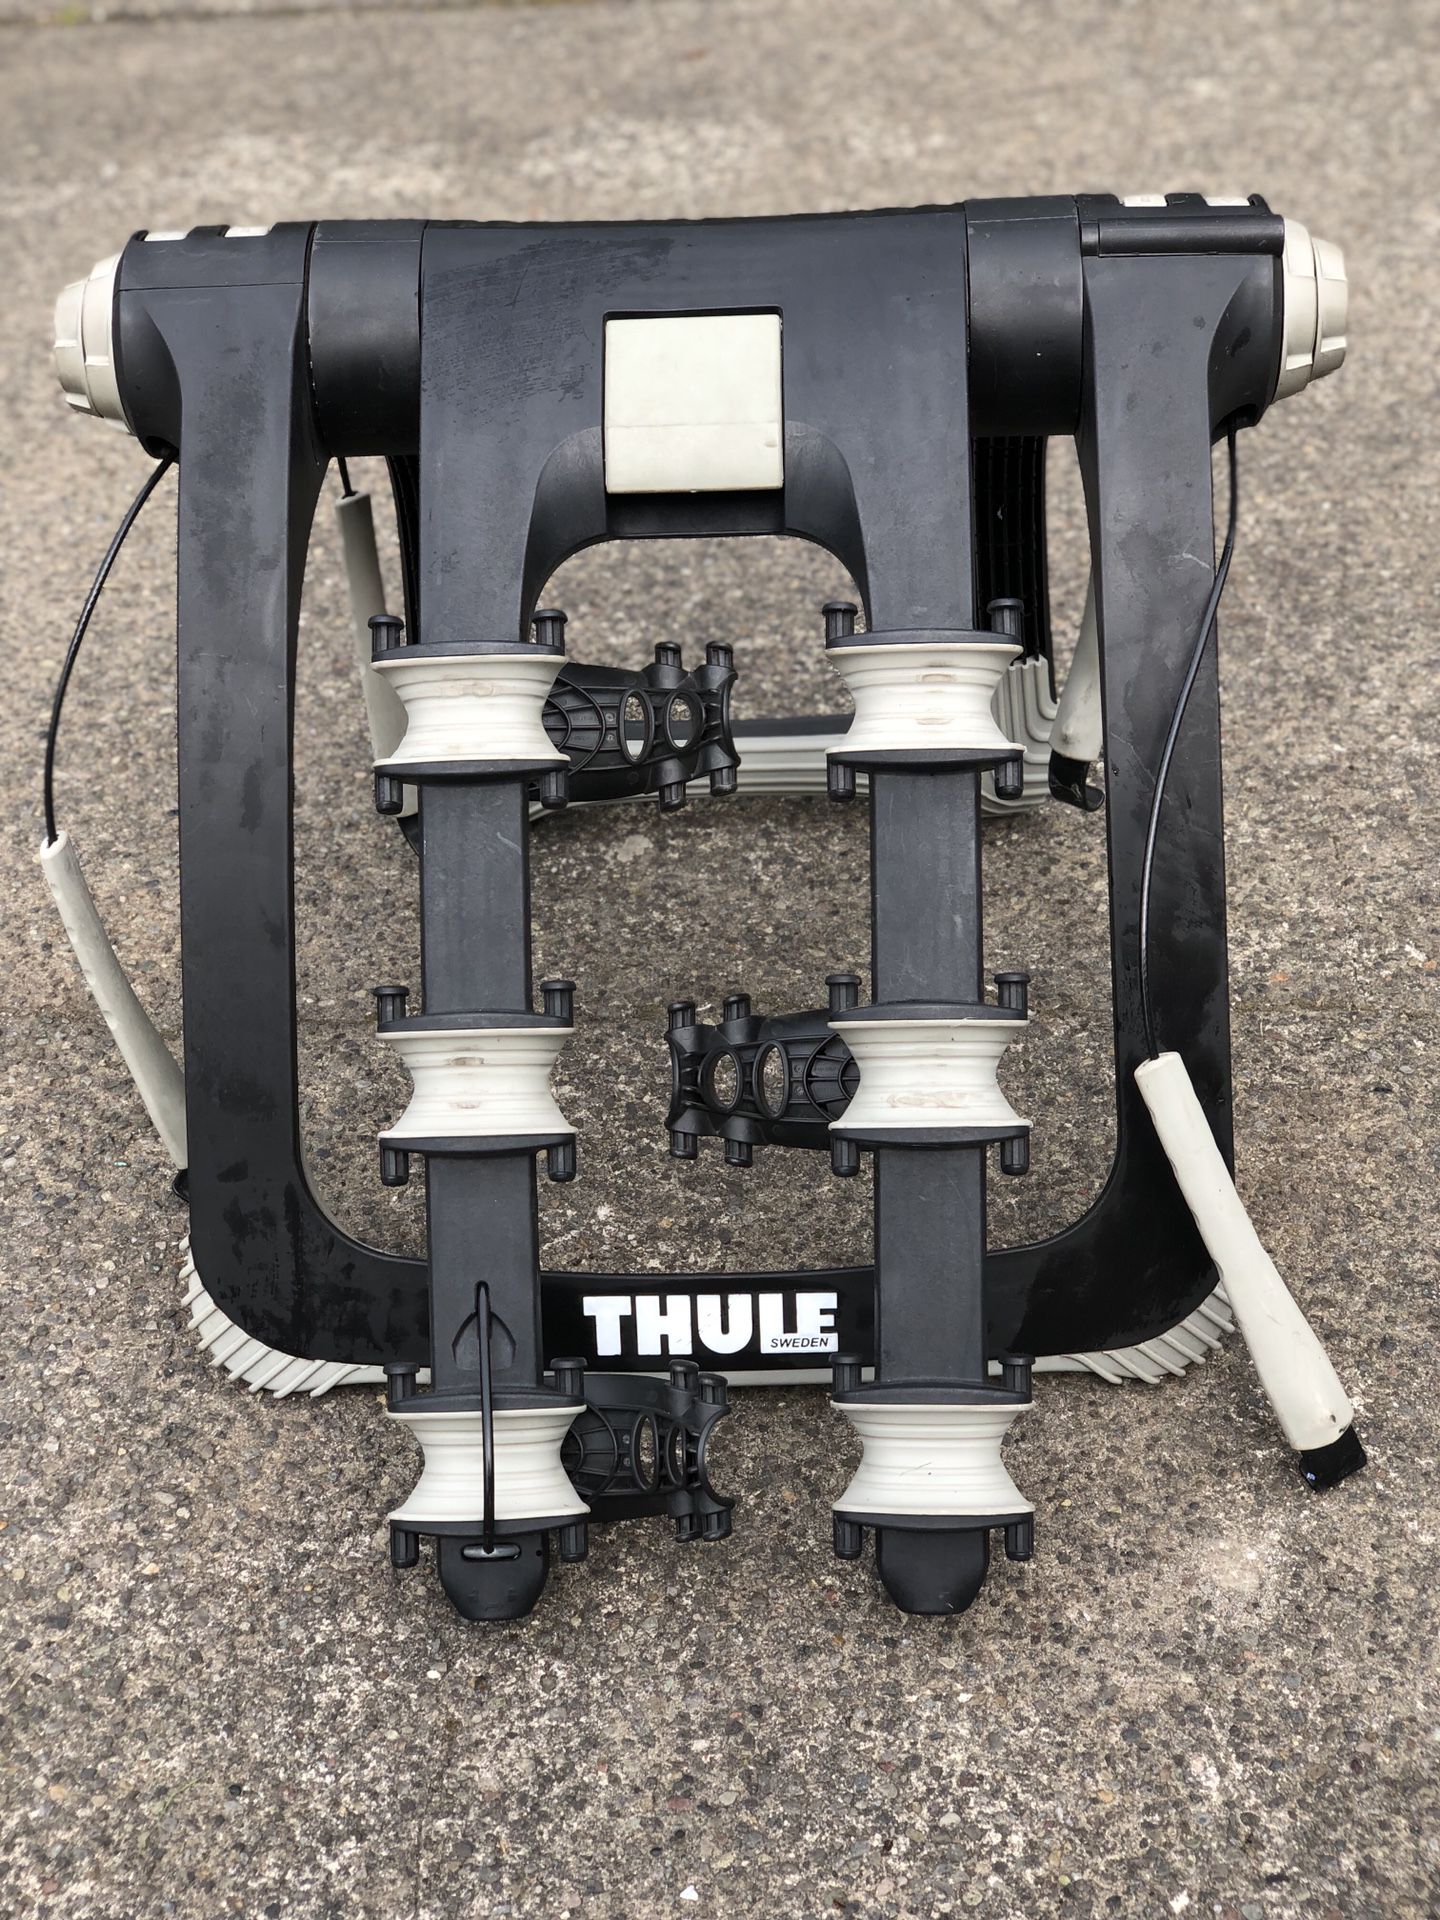 Thule 3 bike universal rack